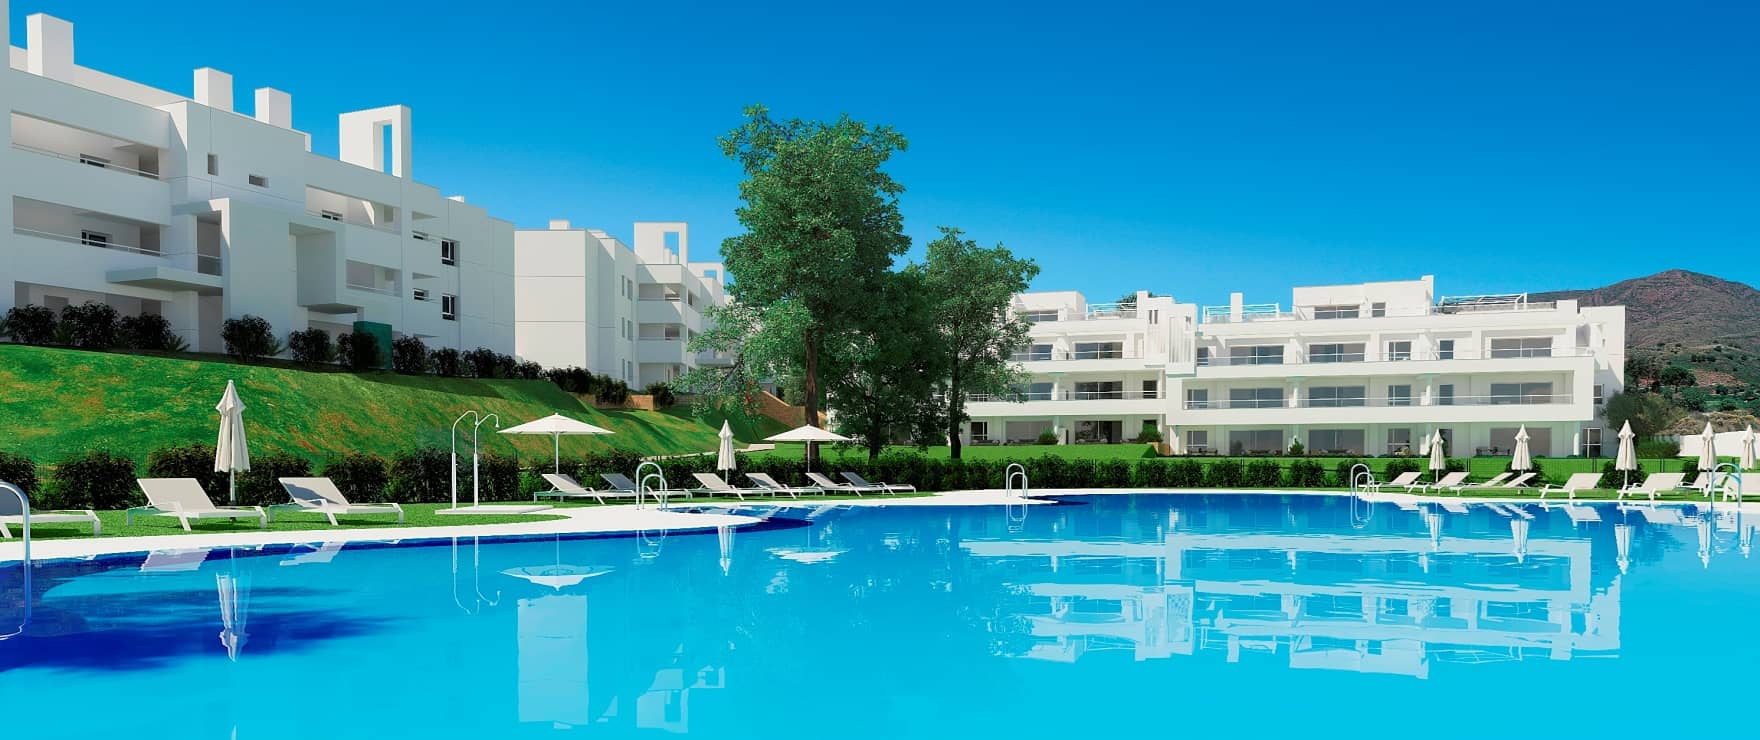 Solana Village South – La Cala Golf Resort, Mijas (Malaga)